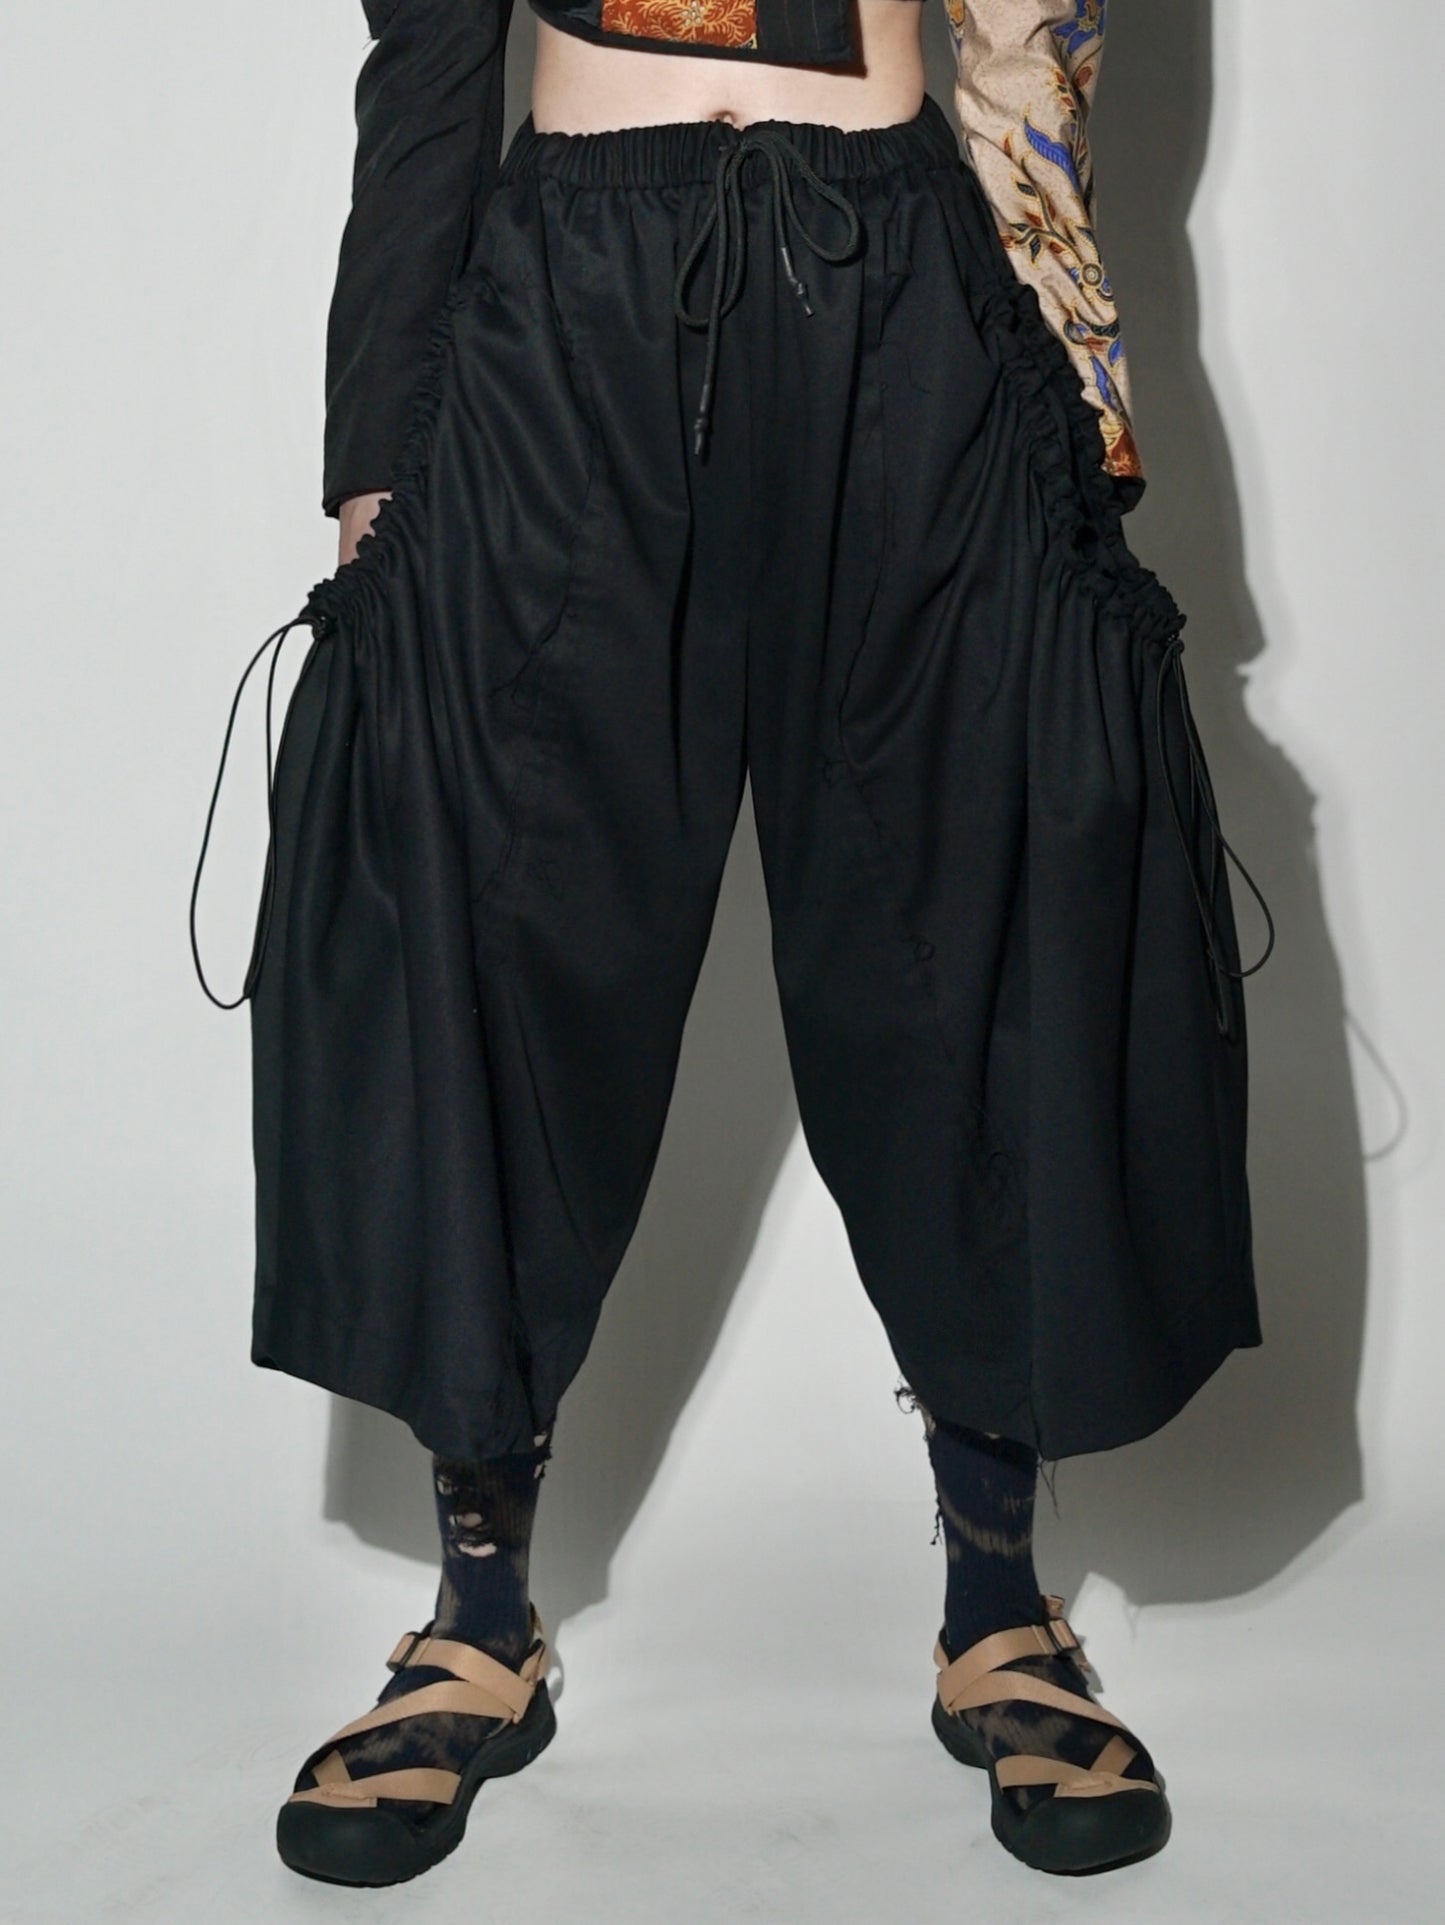 Giant Drawstrings Pockets Pants 2.0 ( Black )